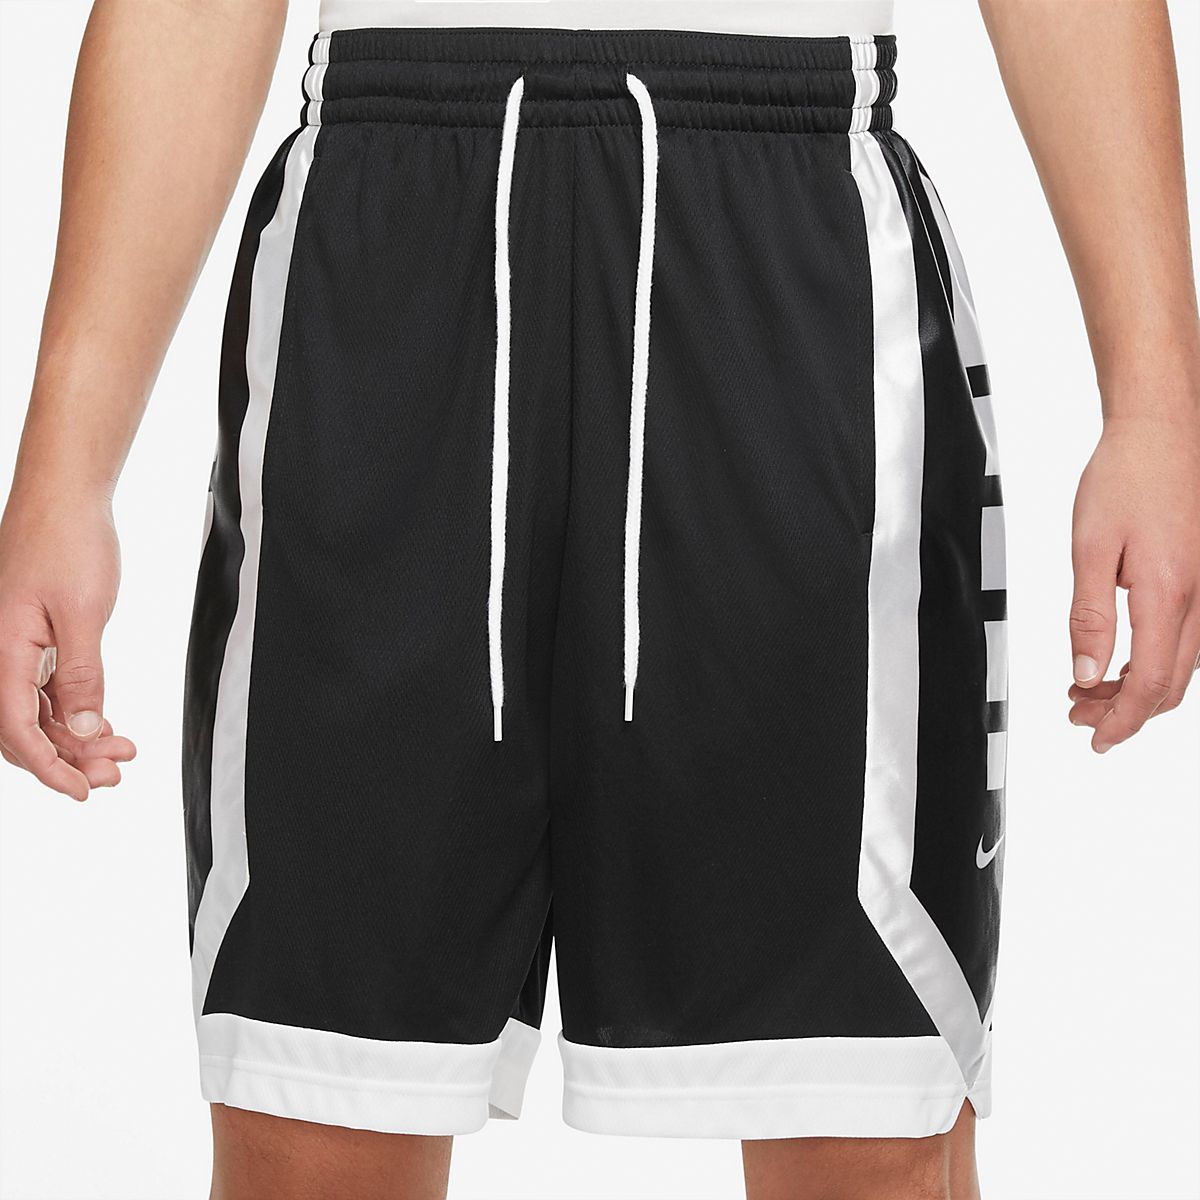 Men's Jordan Brand Teal 2019/20 Charlotte Hornets Icon Edition Swingman Shorts Size: Large